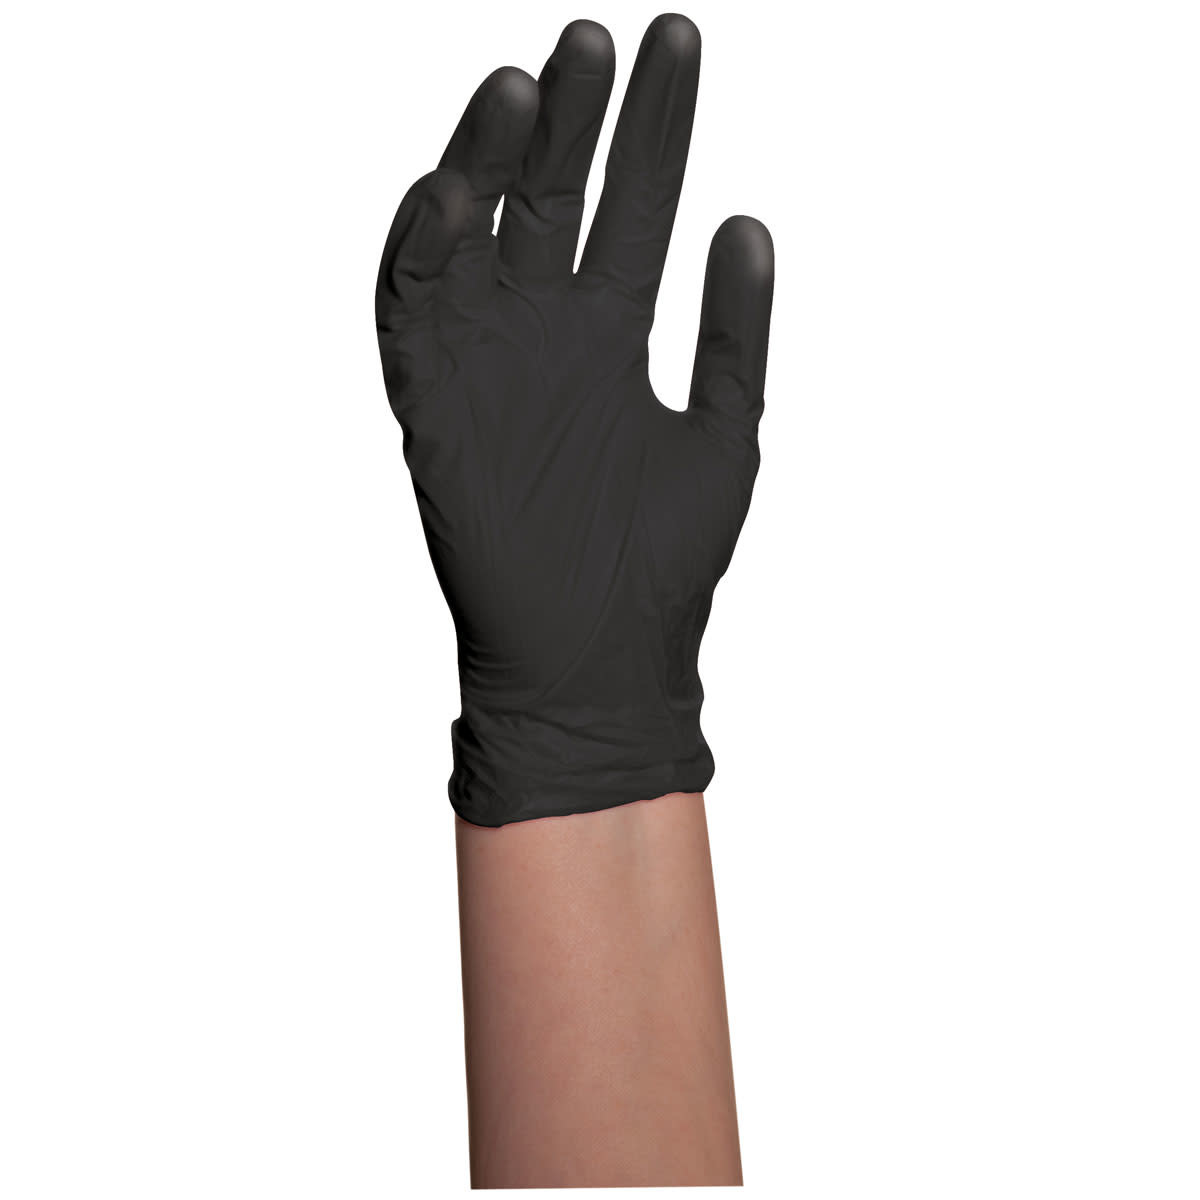 Reusable Latex Gloves